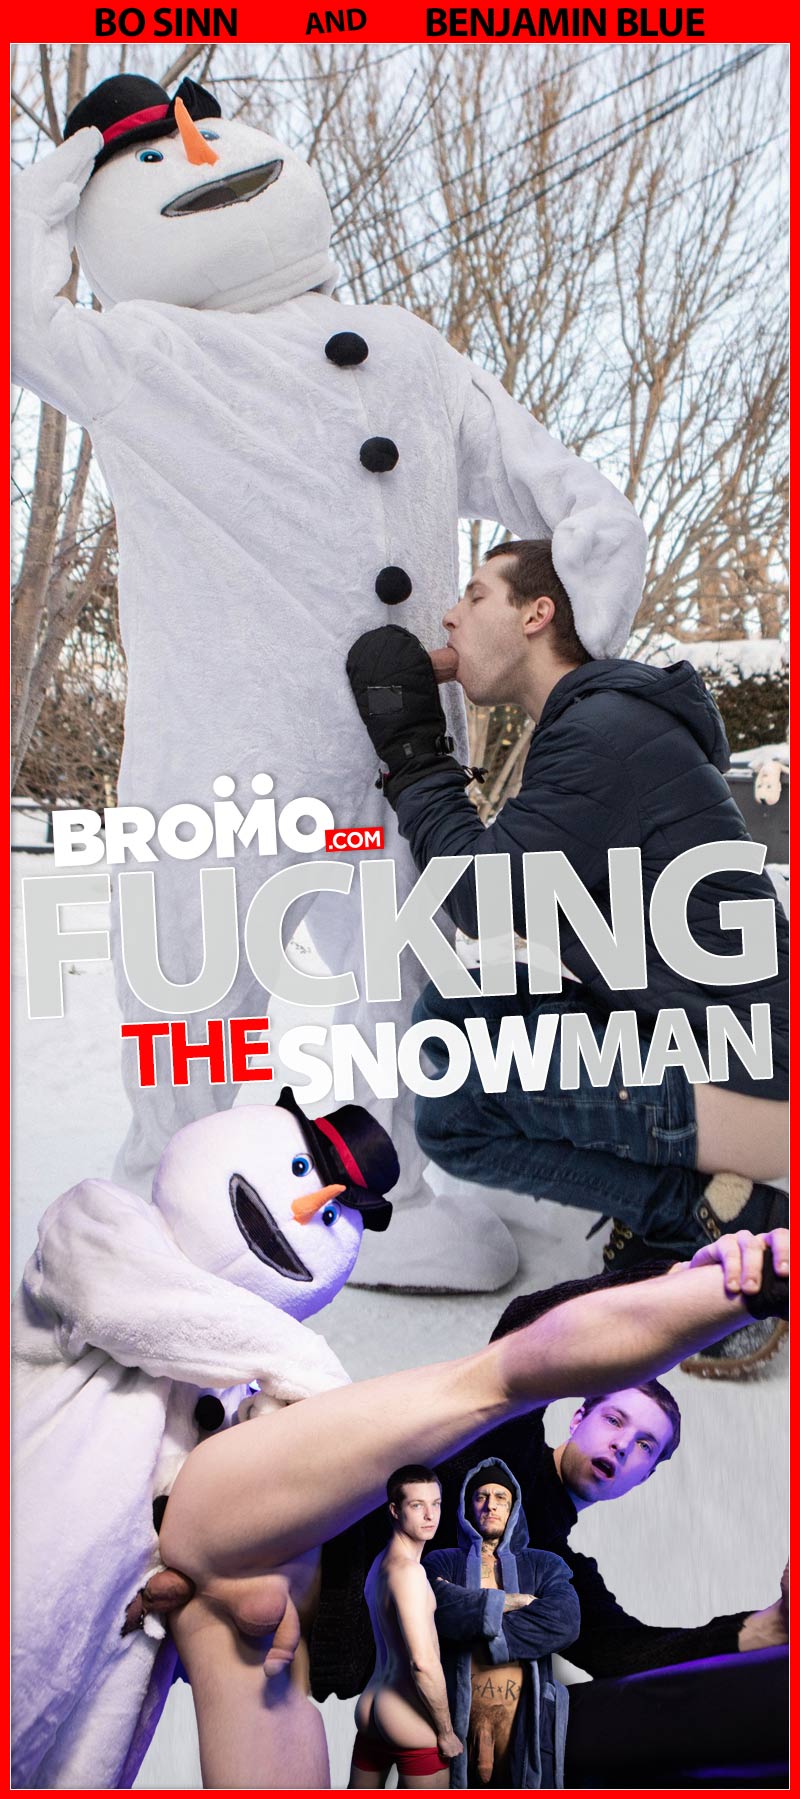 Fucking The Snowman (Bo Sinn Fucks Benjamin Blue) at BROMO